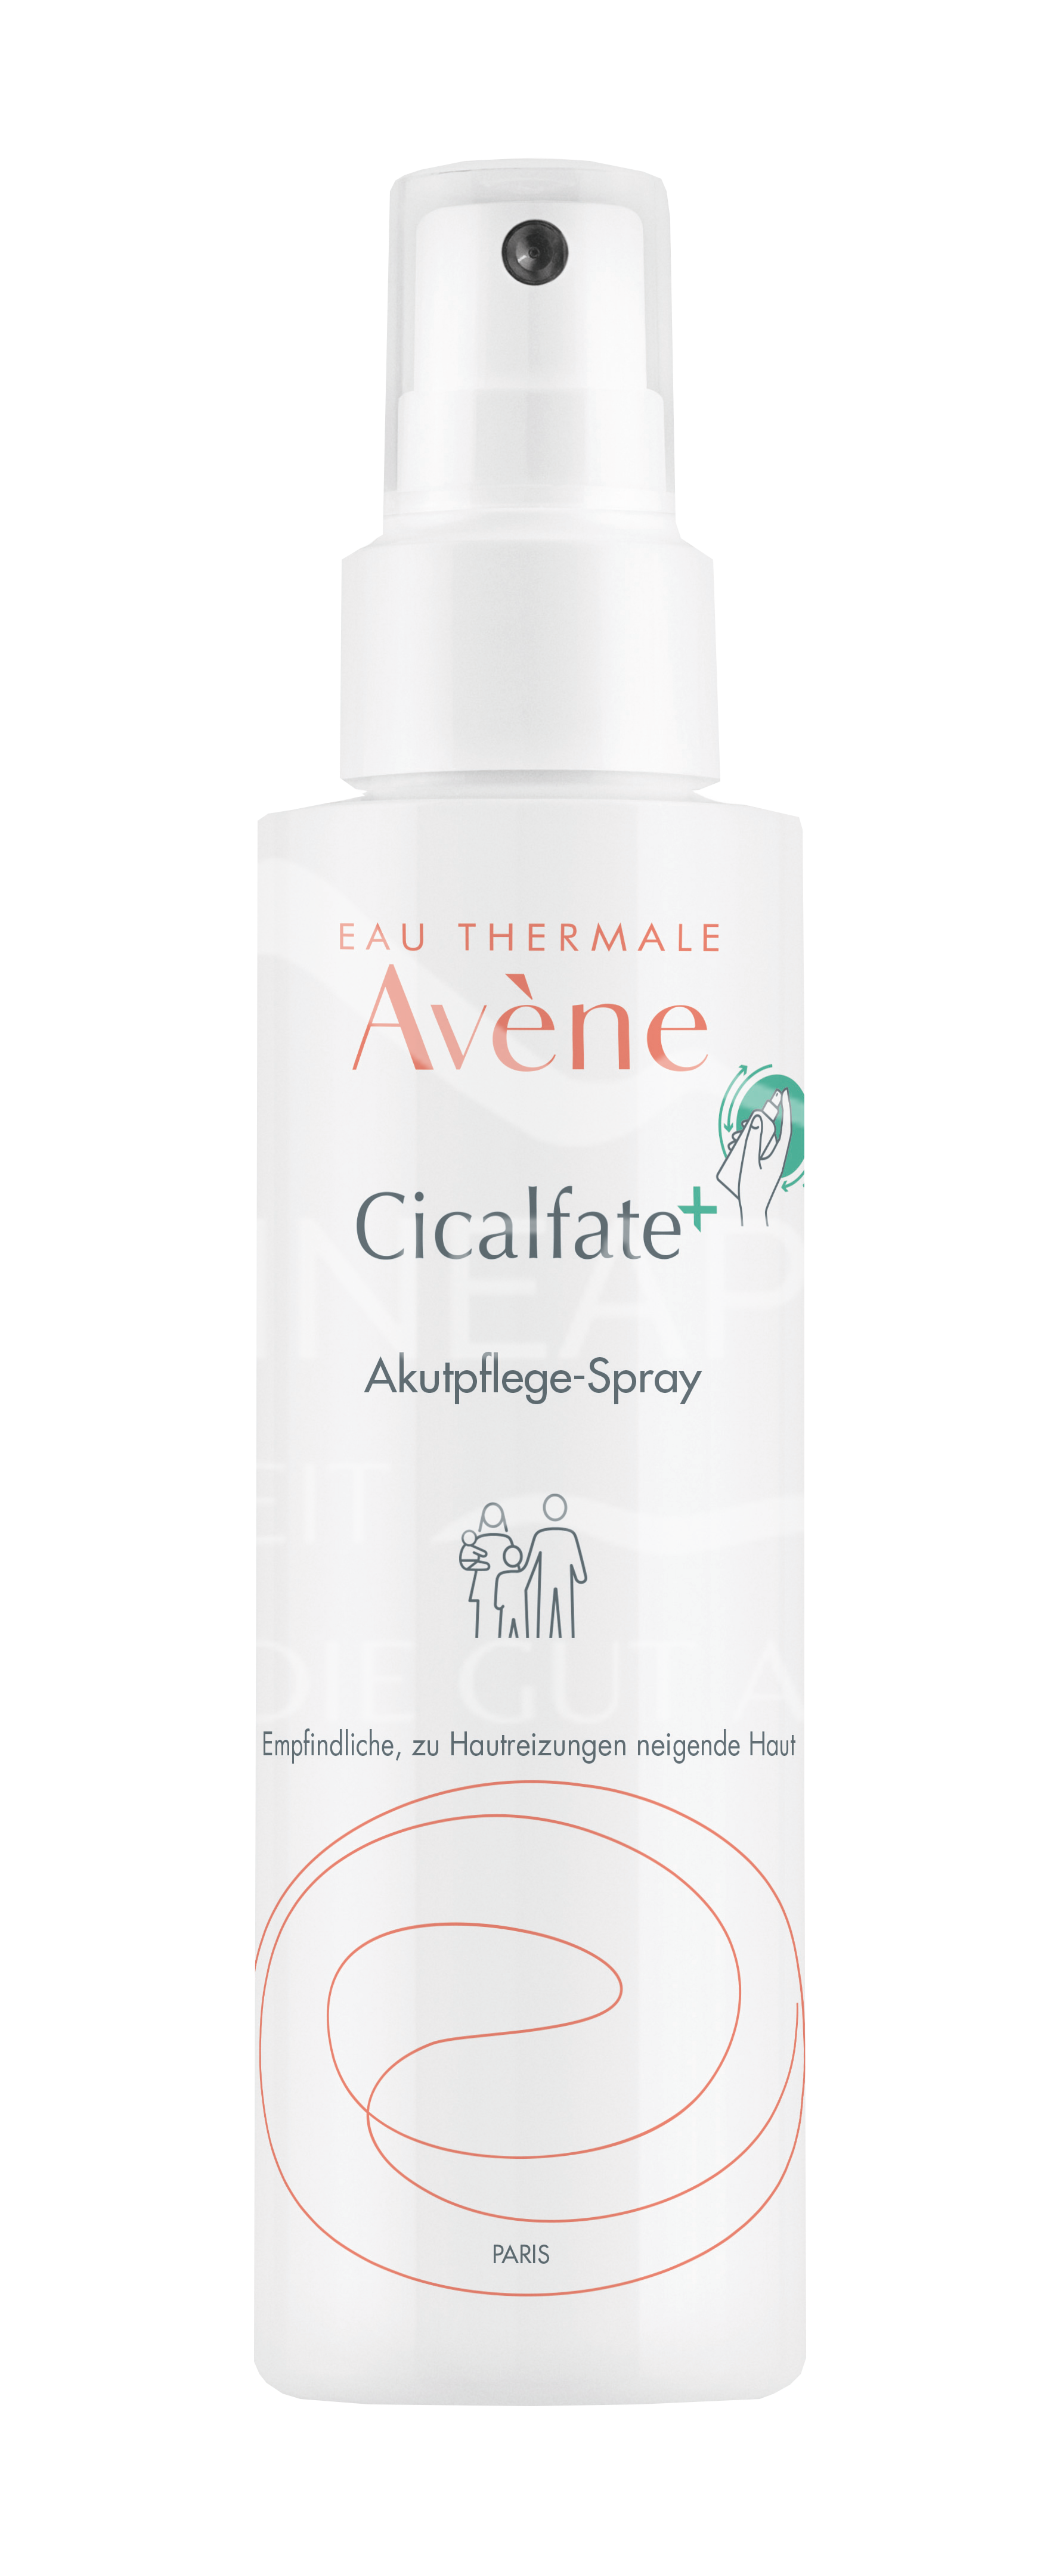 Avene Cicalfate+ Akutpflege-Spray